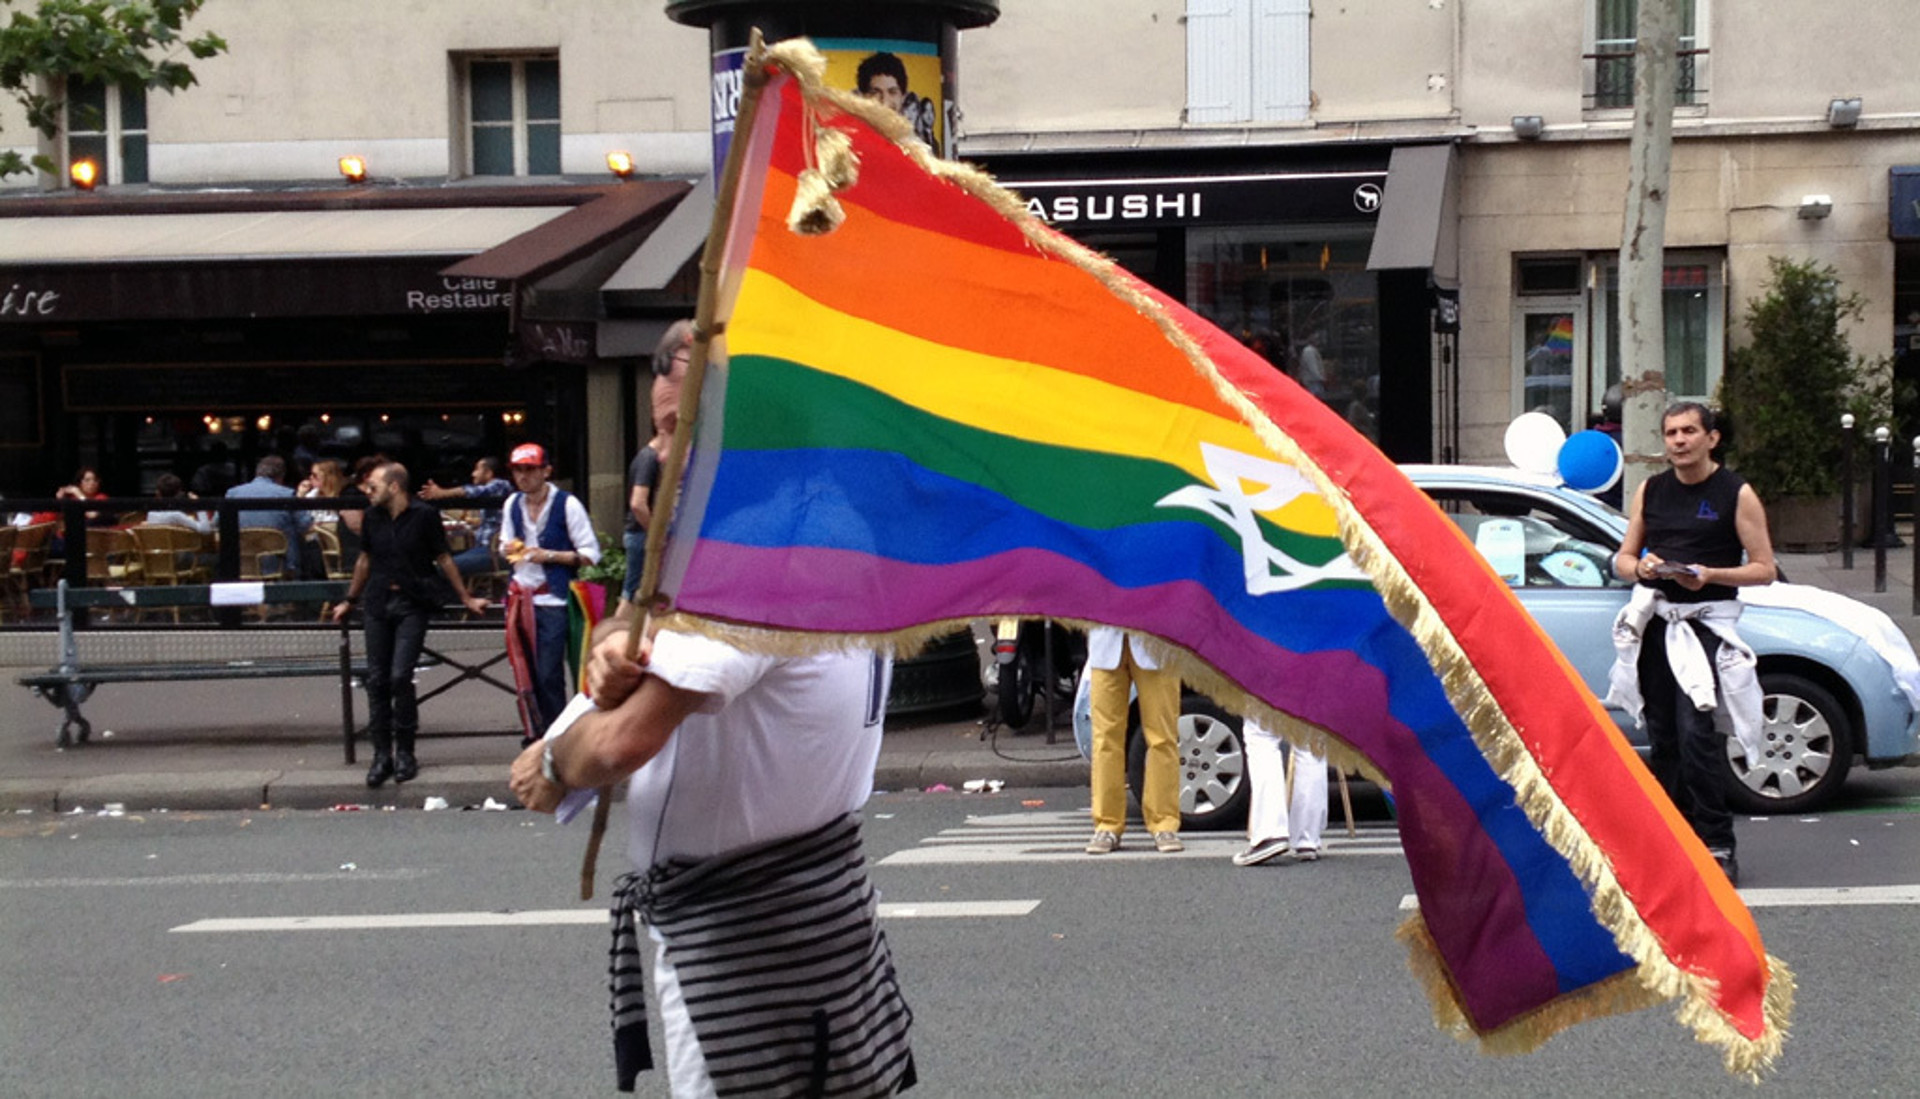 Fahne mit Davidsstern an Gayparade in Paris